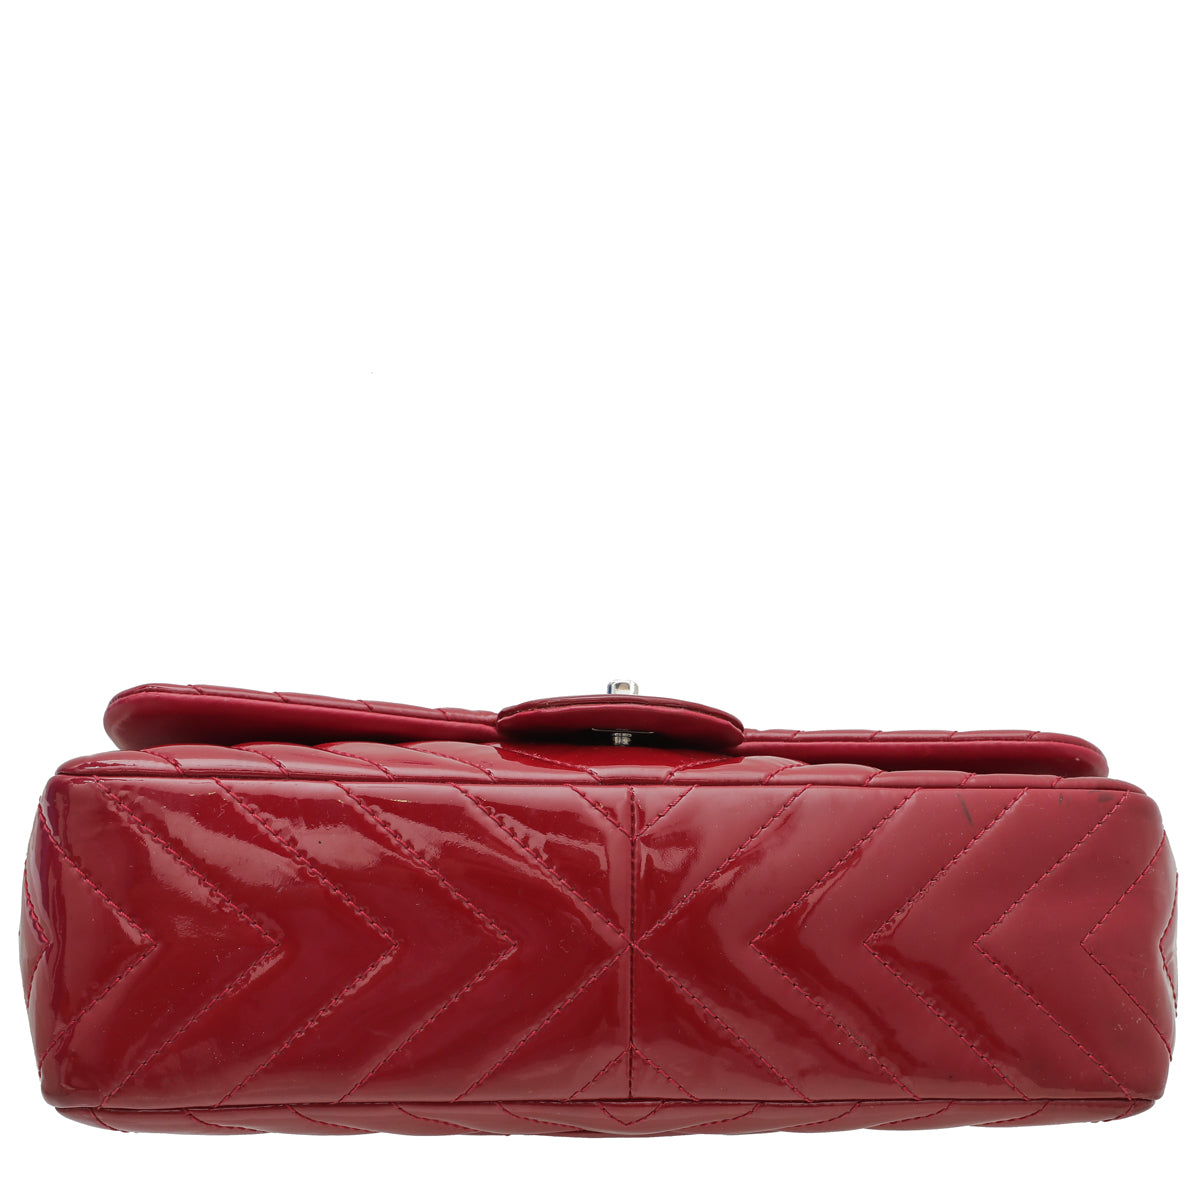 Chanel Red CC Chevron Single Flap Jumbo Bag